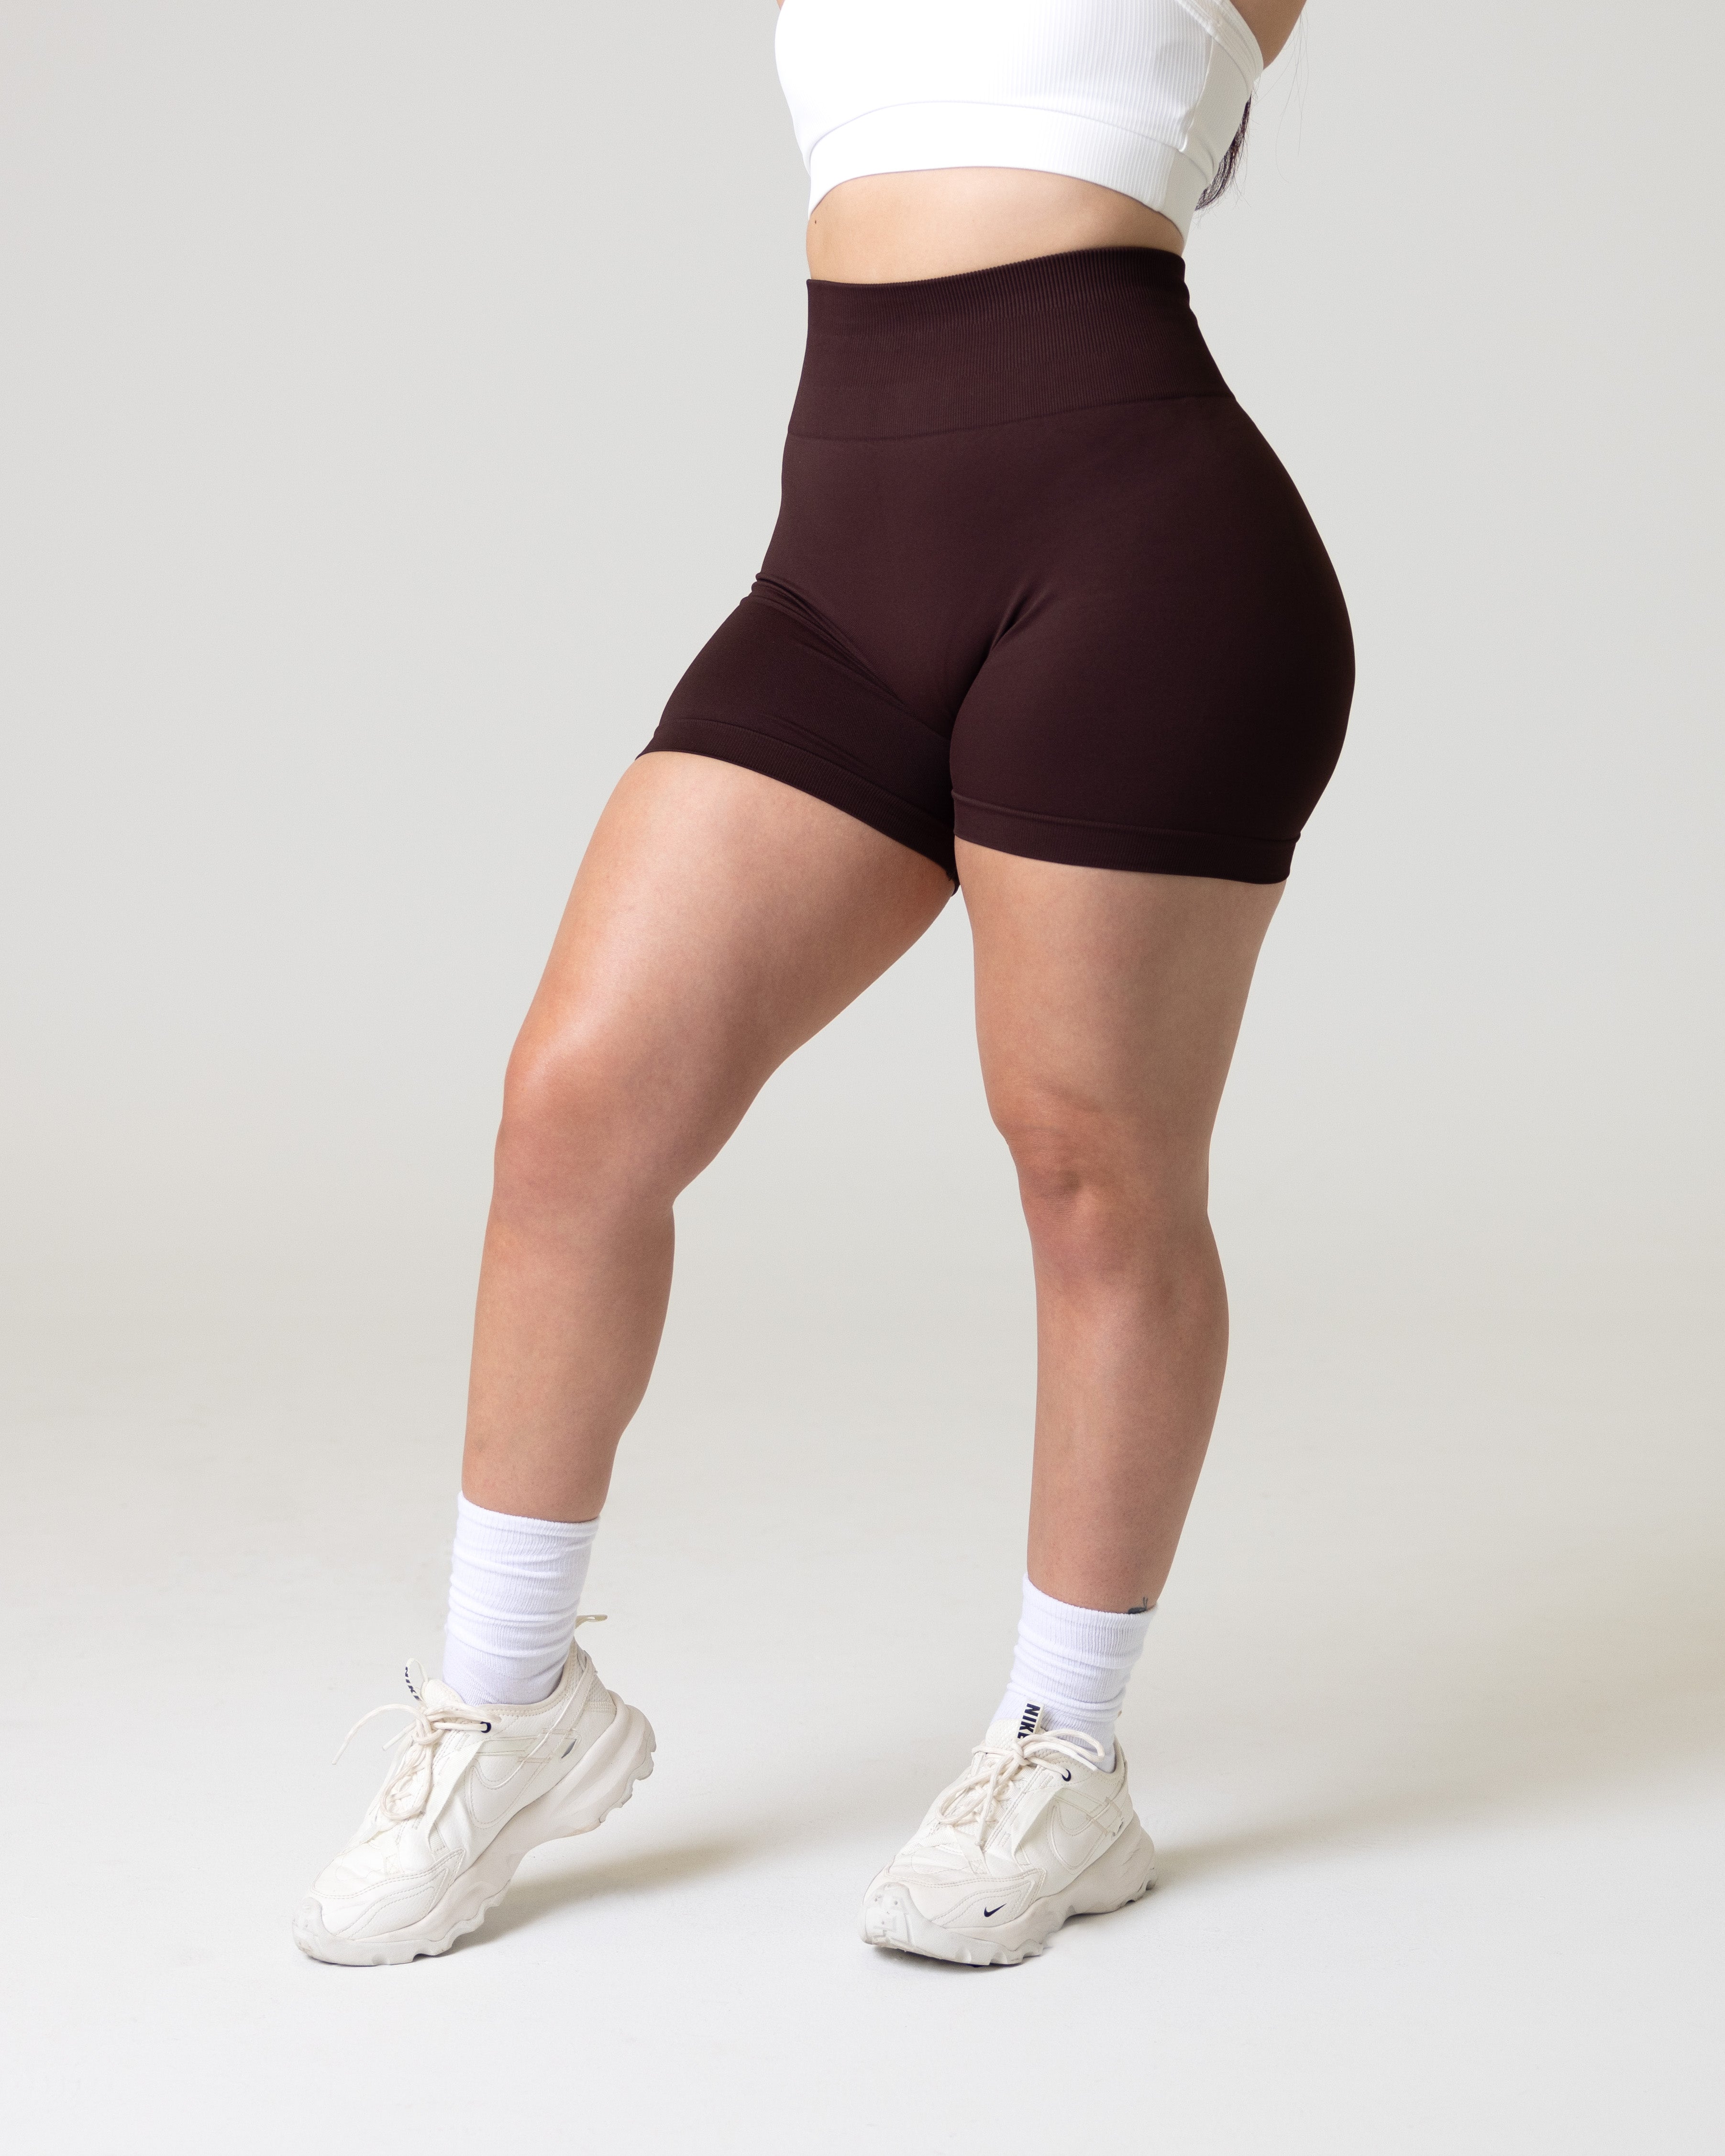 YVYVLOLO Women Workout Gym Shorts Seamless High Waisted Scrunch